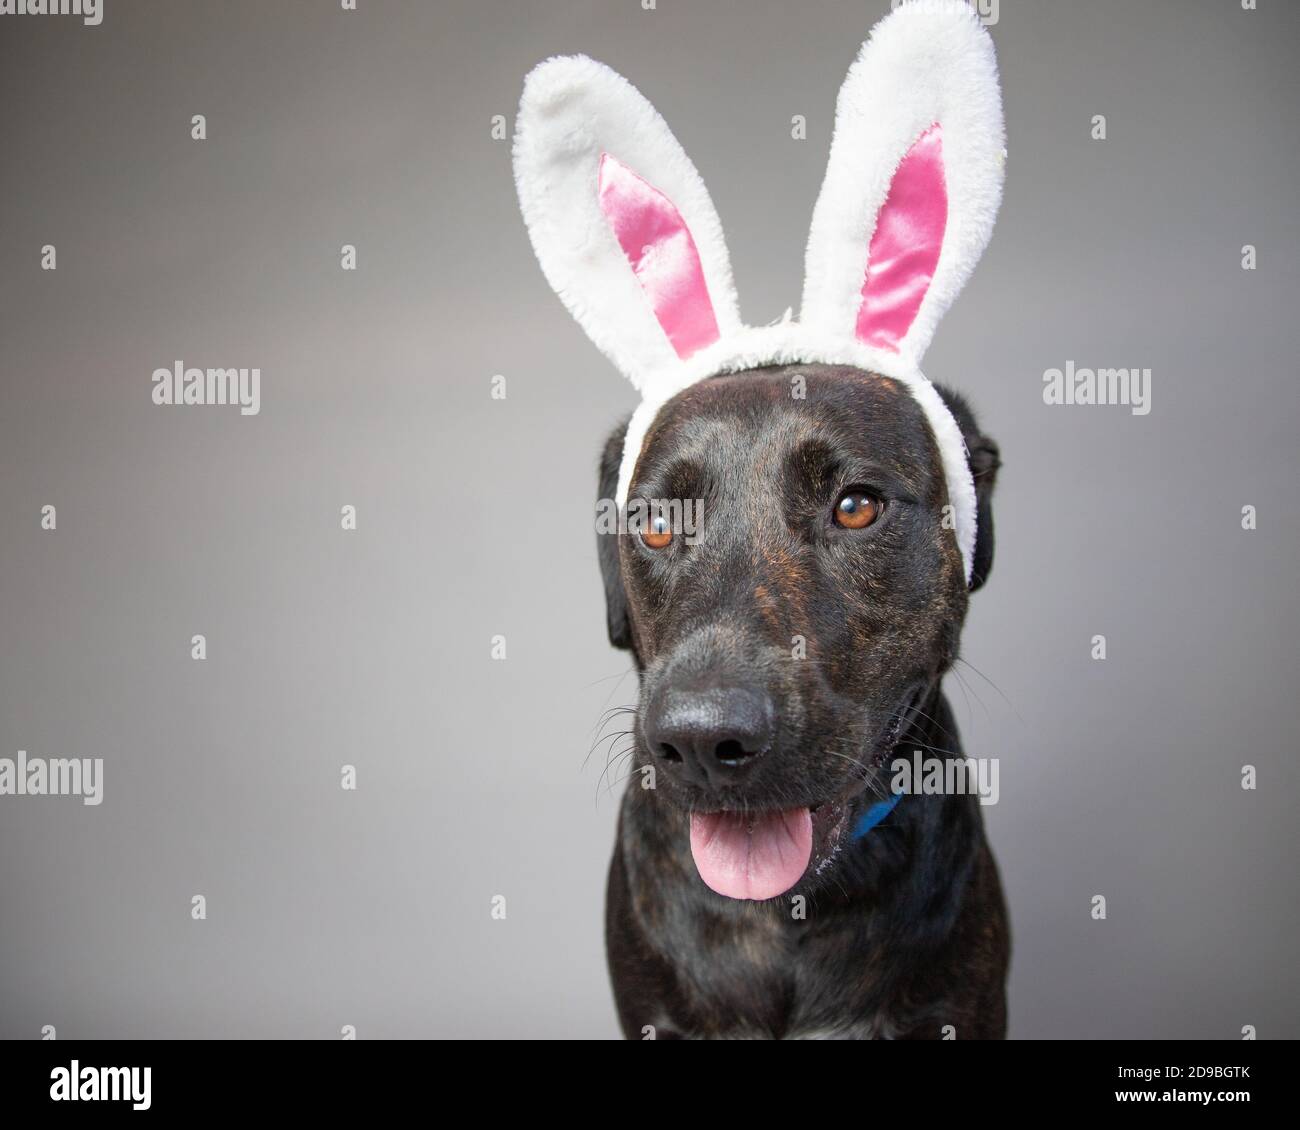 Portrait of a labrador retriever wearing bunny ears Stock Photo